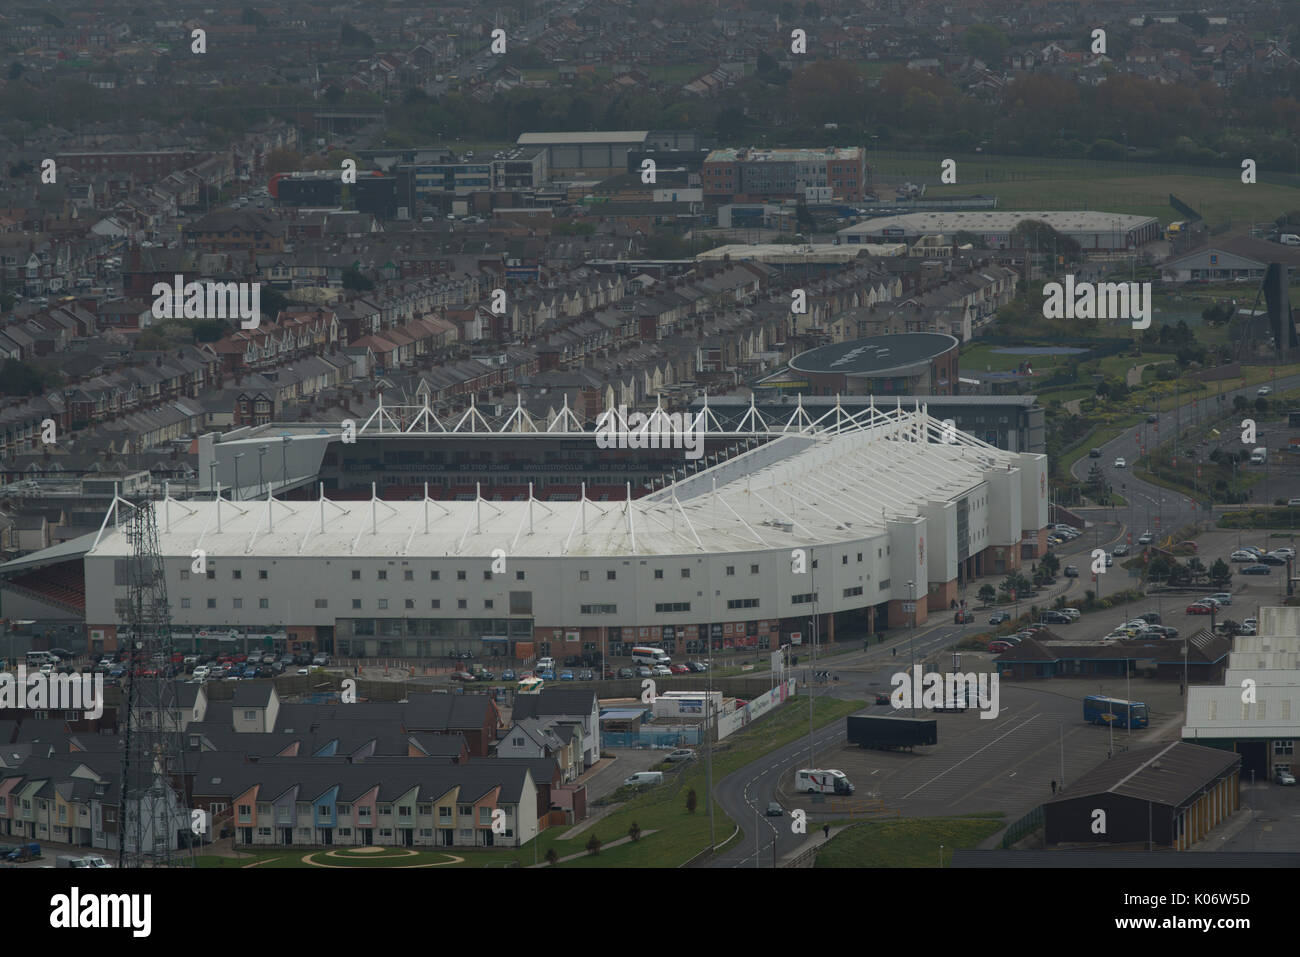 Blackpool football stadium, Bloomfield road. credit: LEE RAMSDEN / ALAMY Stock Photo